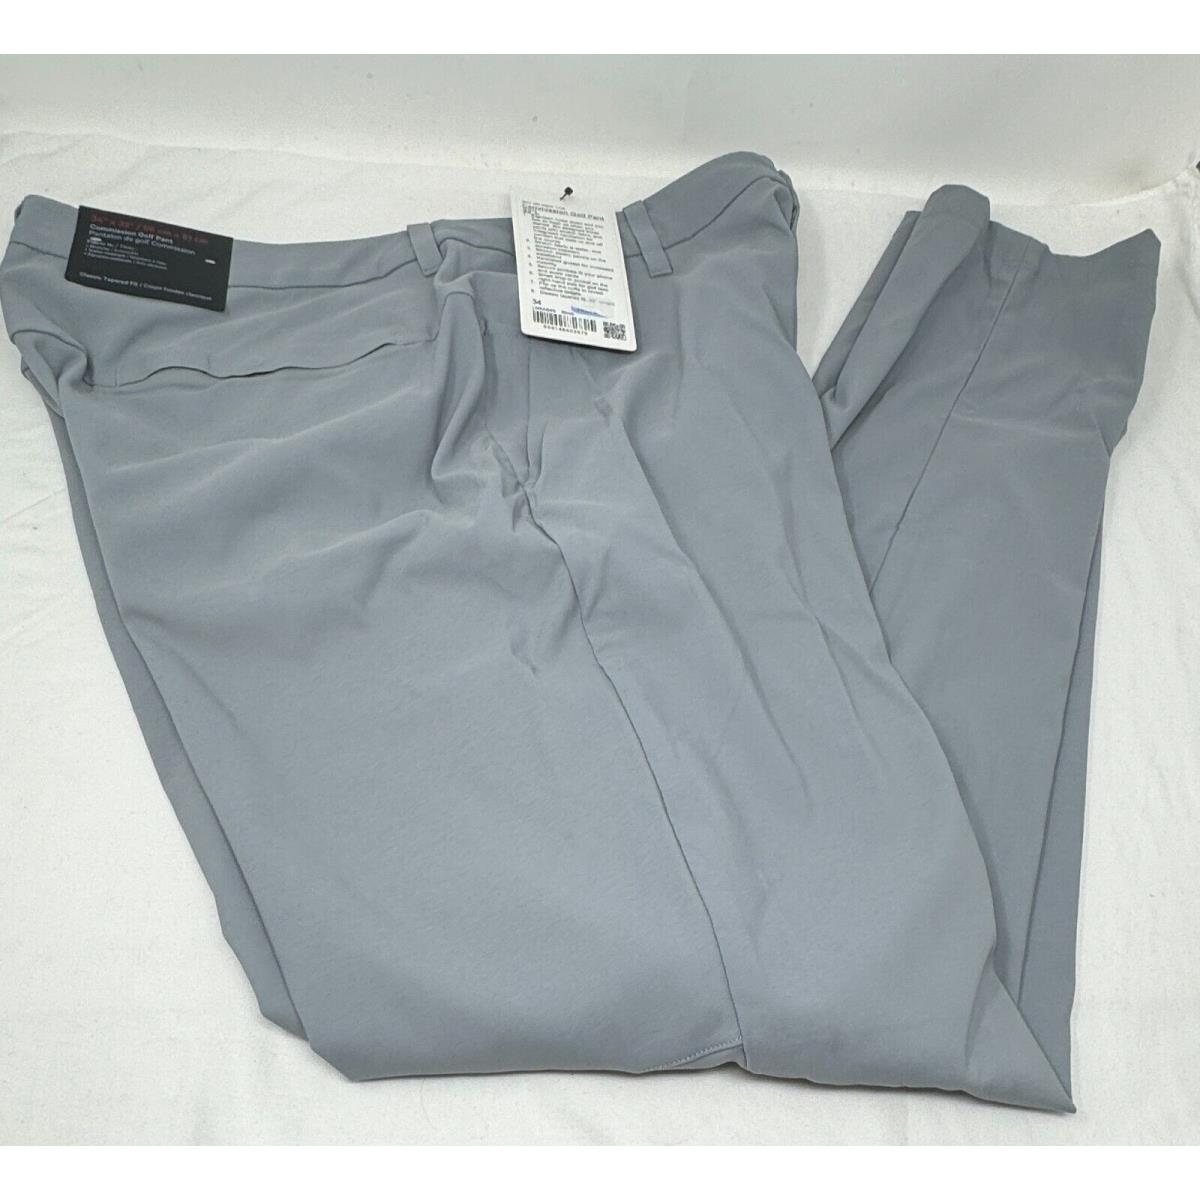 Lululemon Commission Golf Pant 32 L Size 34 Rgig Rhino Gray